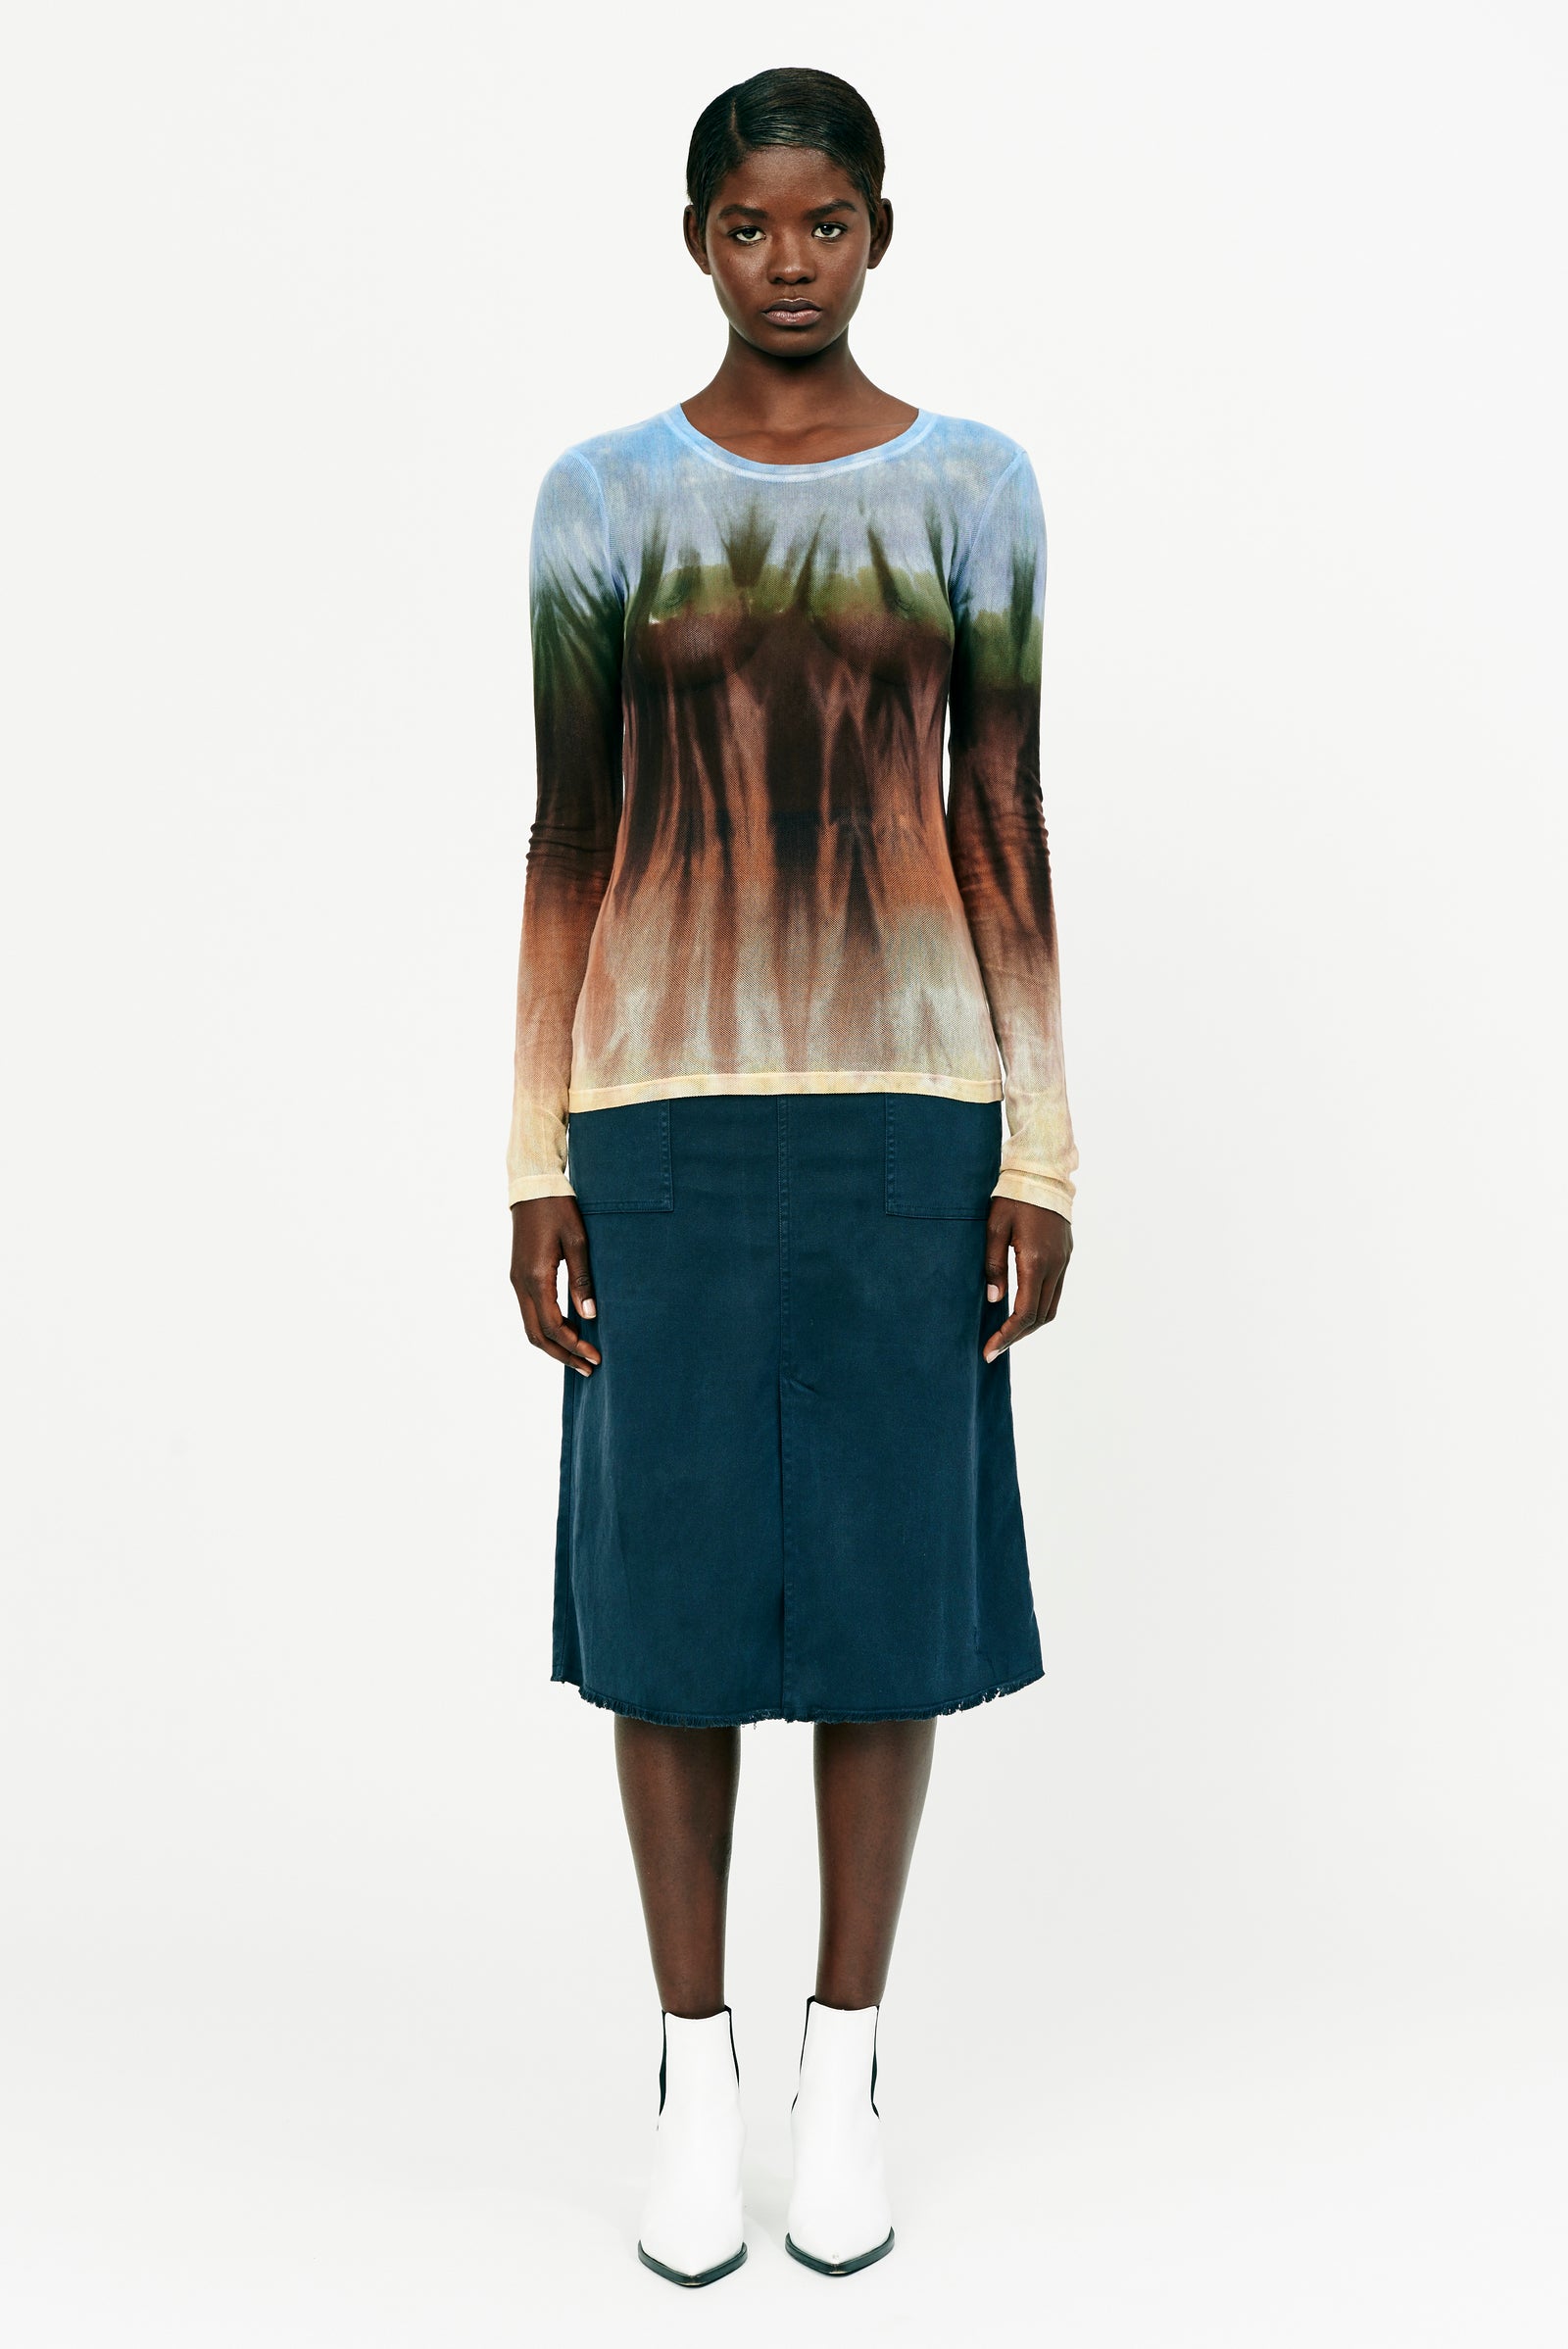 Landscape Tie Dye Cotton Mesh Long Sleeve T shirt RA-TOP/JERSEY ARCHIVE-FALL1'22   